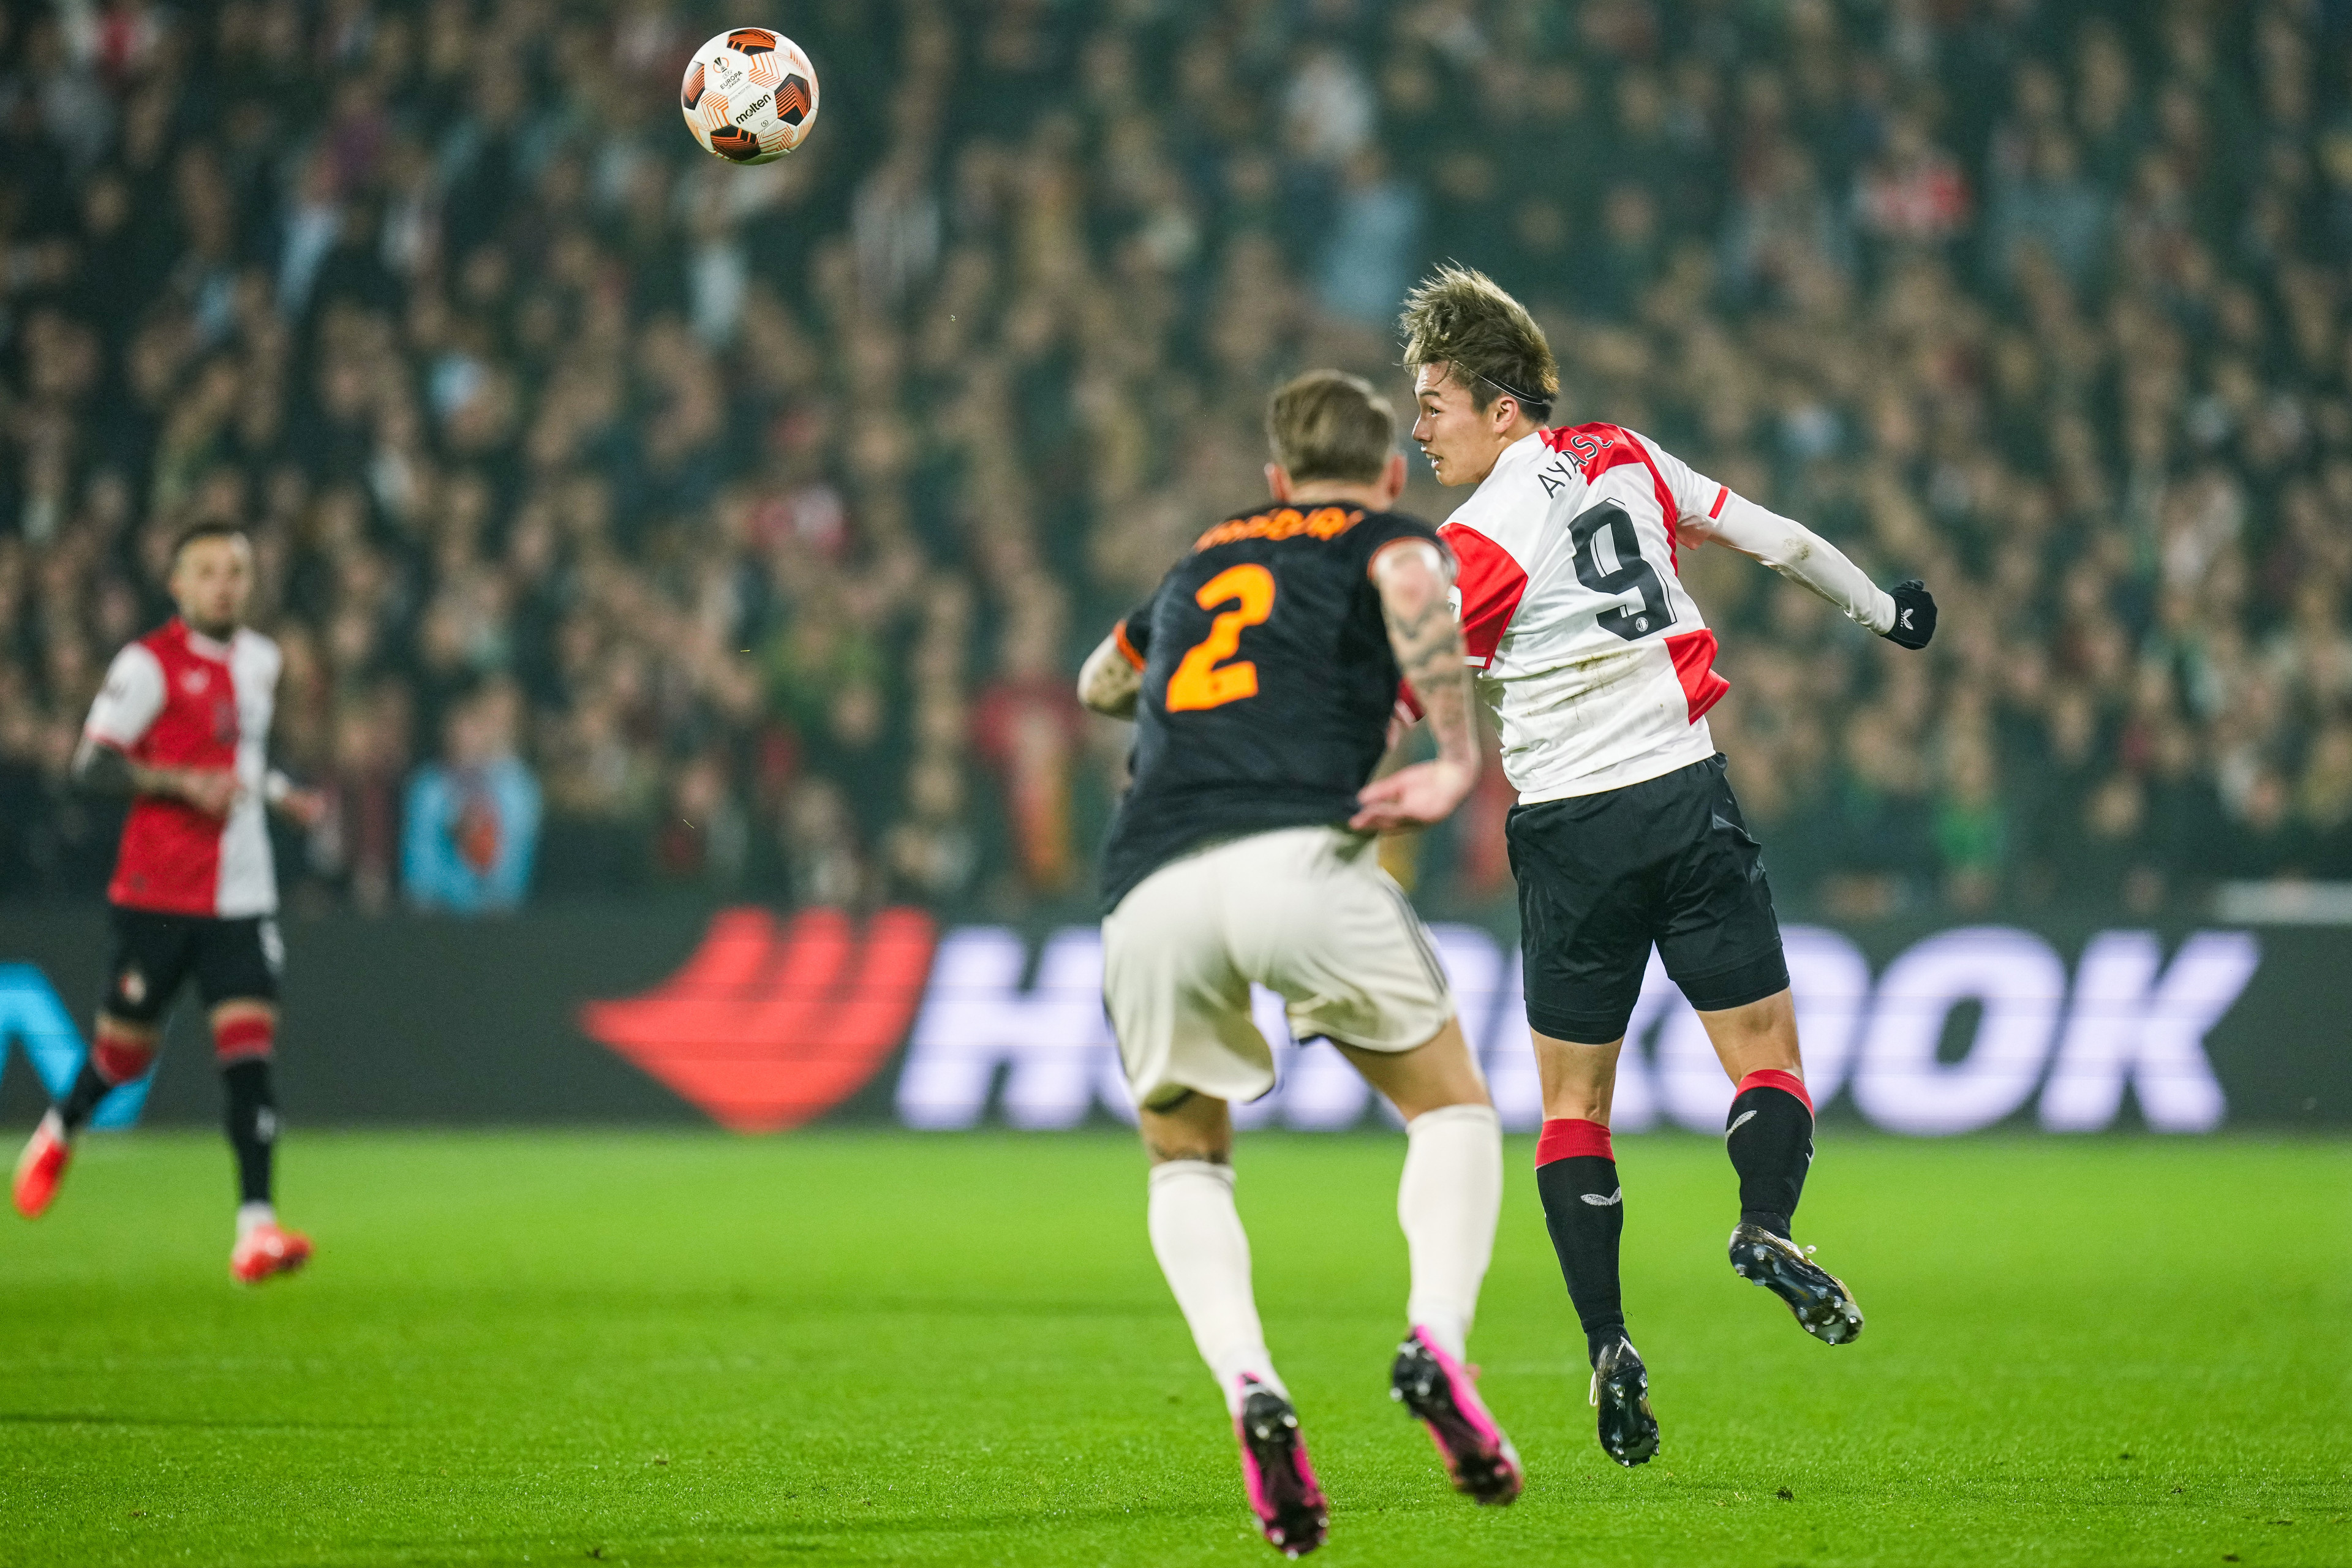 Liveblog • Feyenoord - AS Roma • 1-1 [FT]